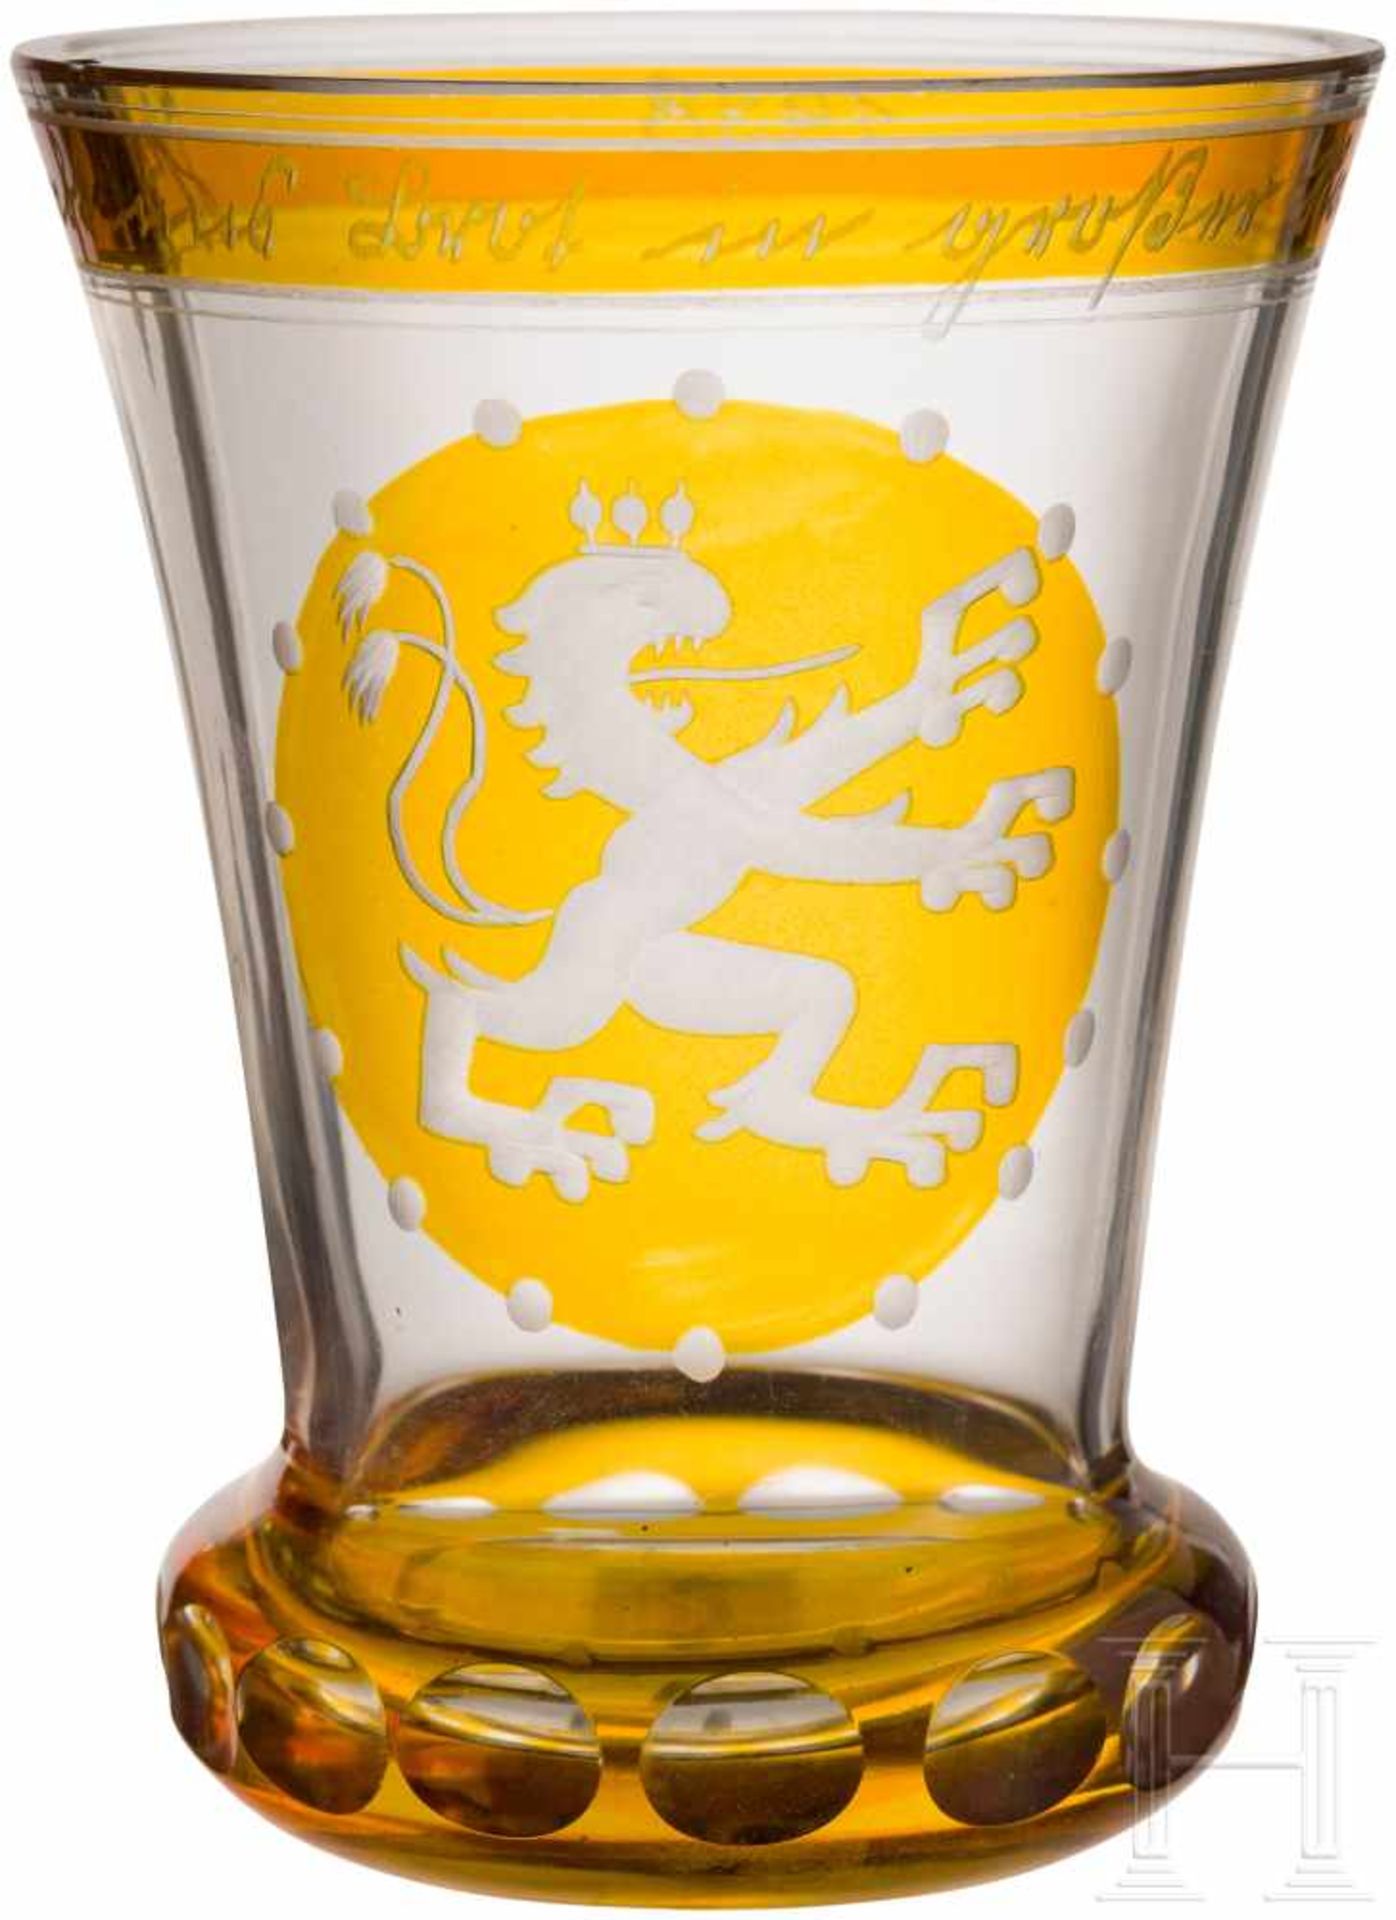 "V.D.A.-Freundschaftsglas" (Sockelglas) Panther 1938Sockelbecher aus farblosem Glas, außen teilweise